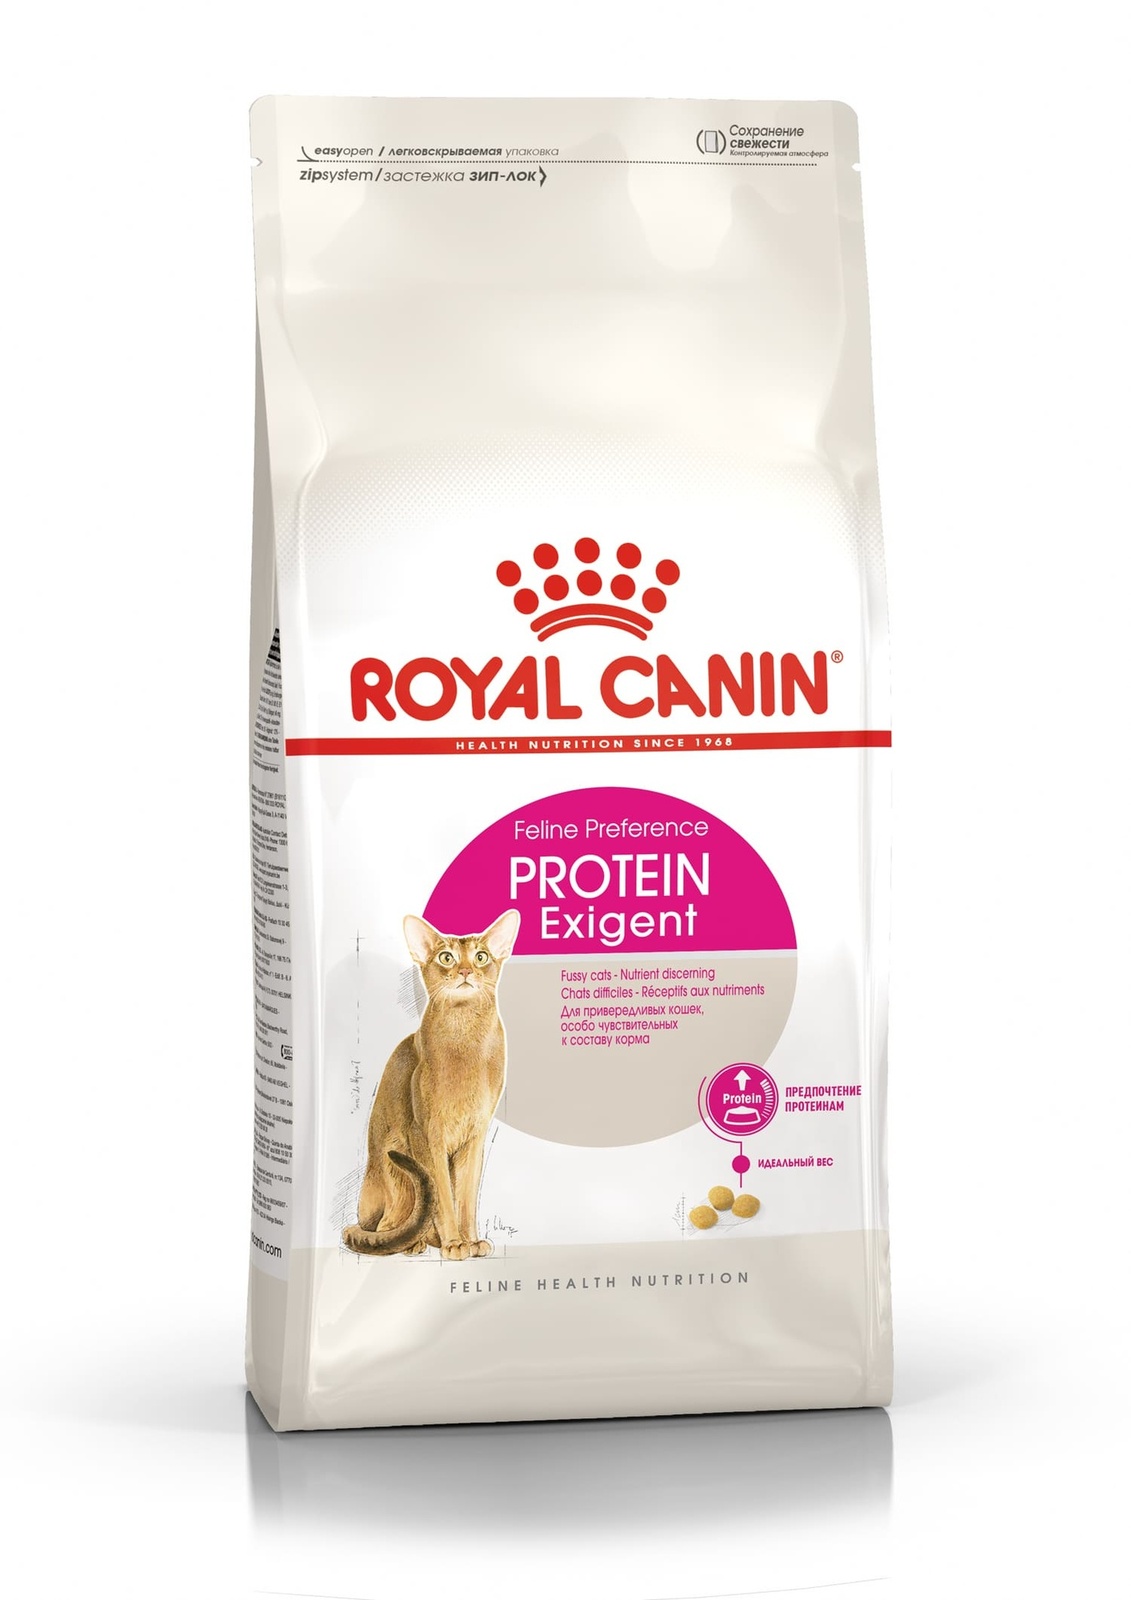 Royal Canin Корм Royal Canin для кошек привередливых в питании (1-12 лет) (2 кг) royal canin protein exigent для привередливых взрослых кошек 0 4 0 4 кг